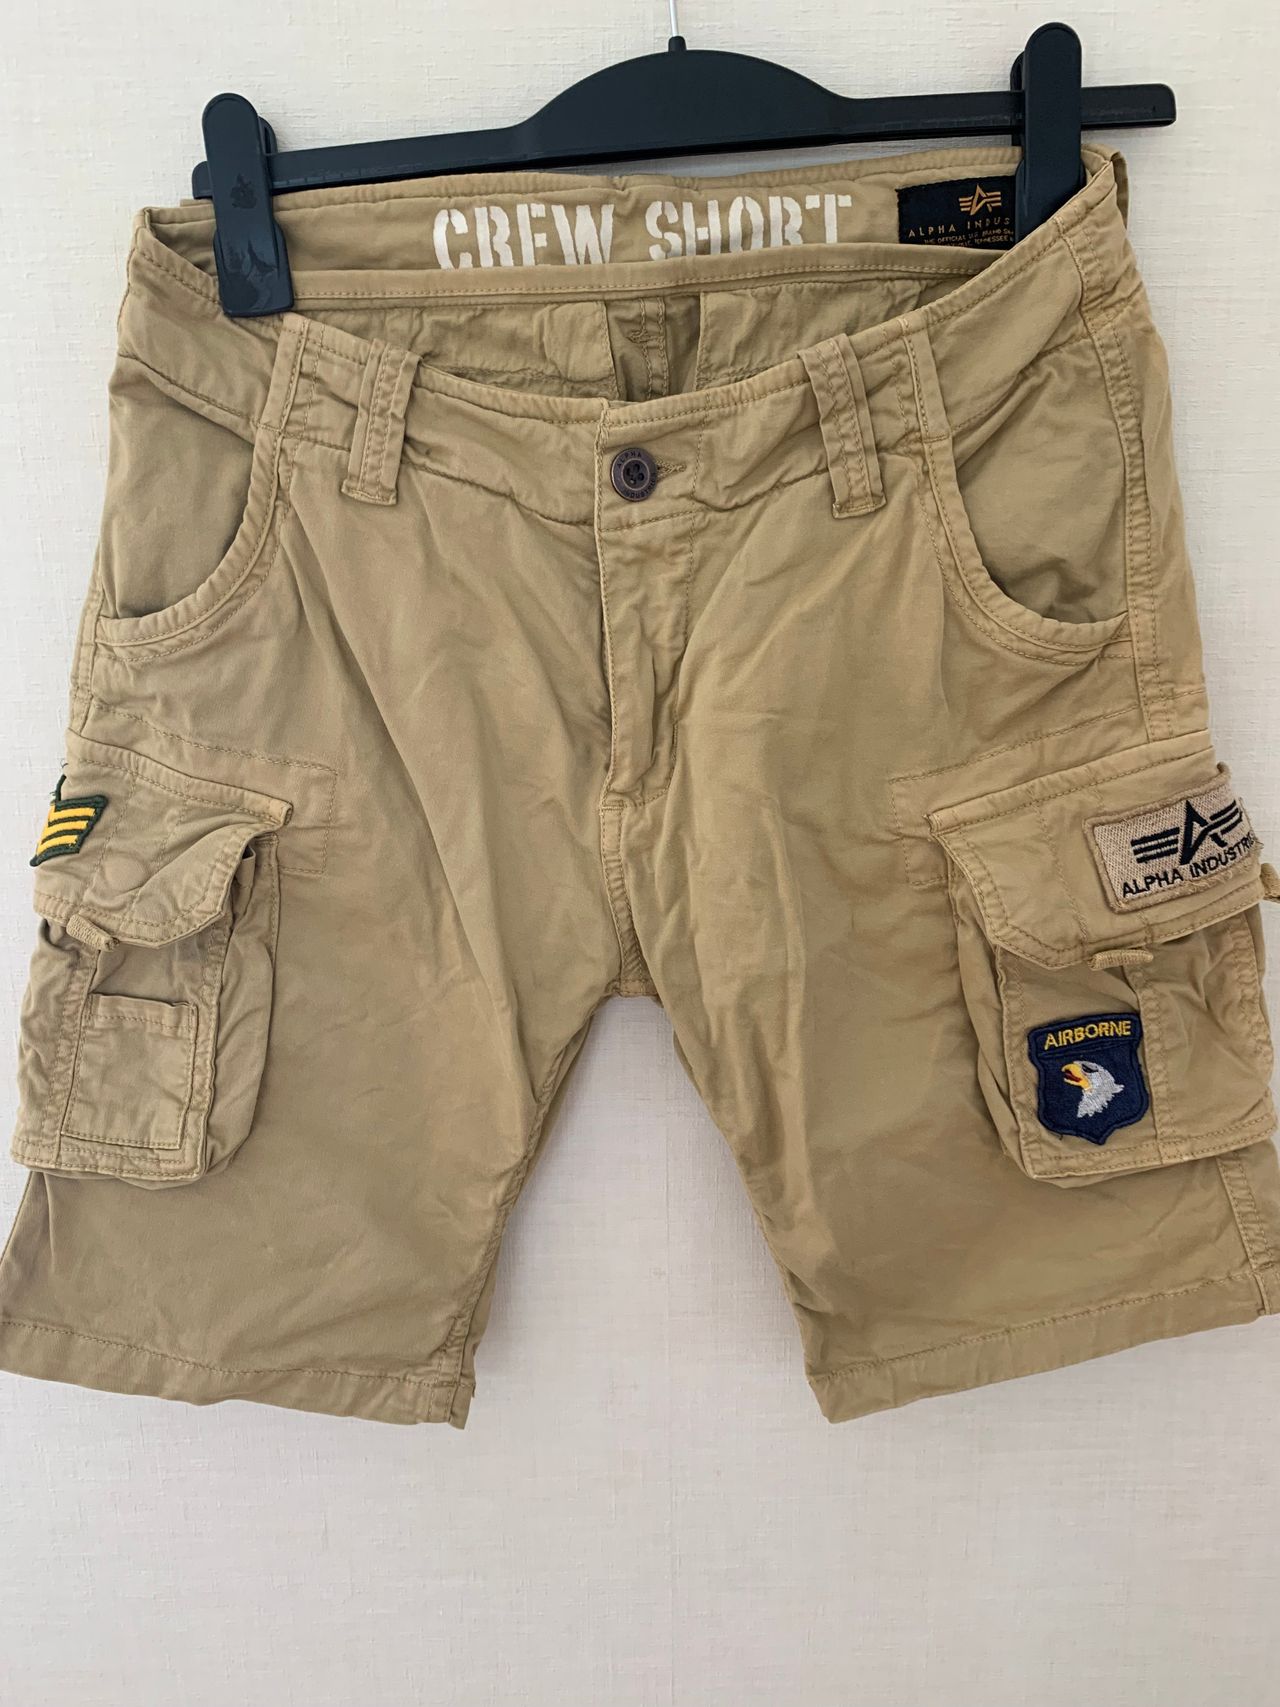 Alpha FINN torget | Crew shorts Industries